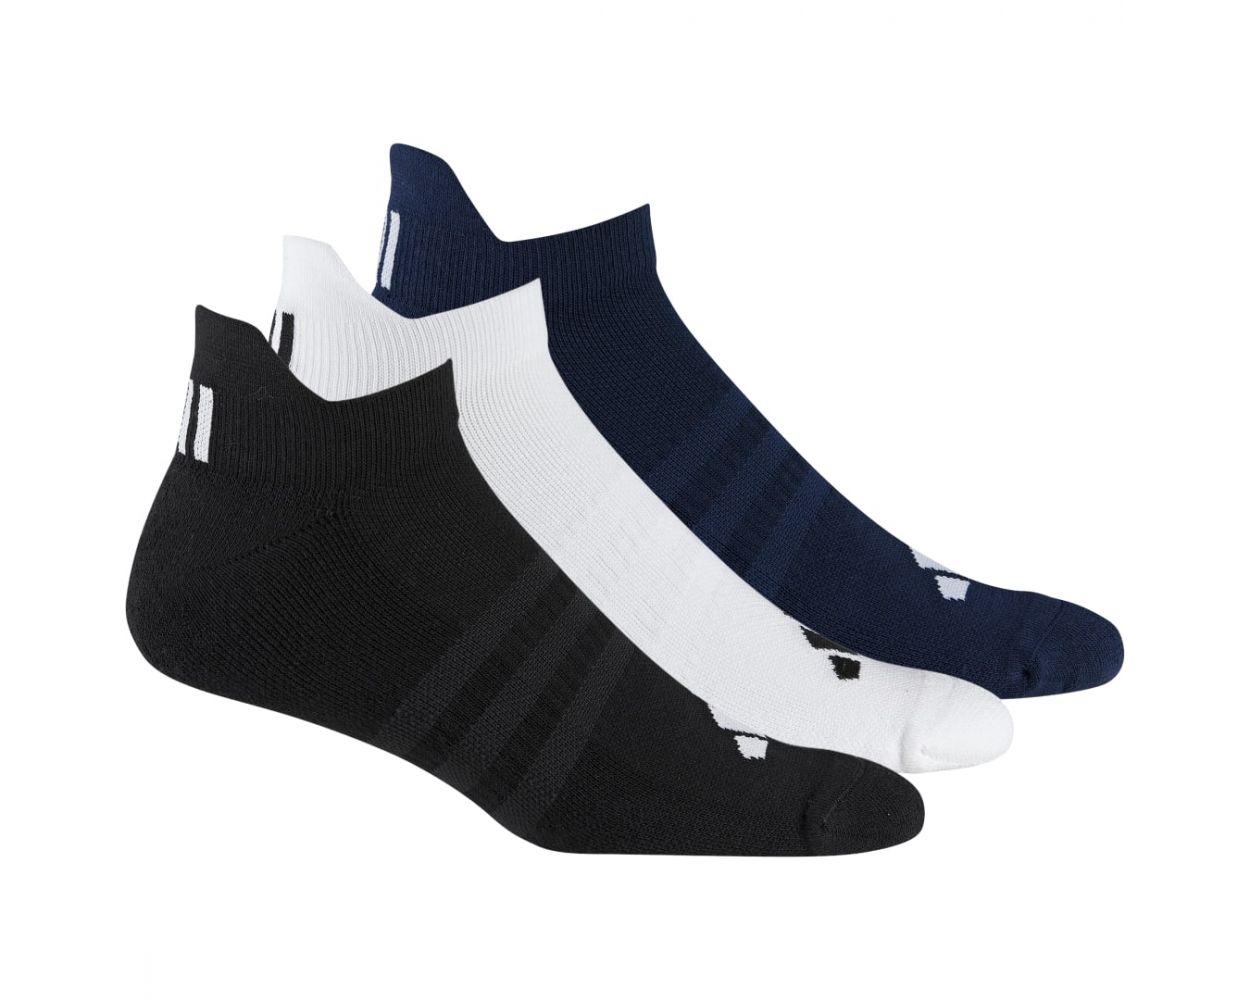 Adidas Men's Ankle Socks - Multicolor 3 Pack